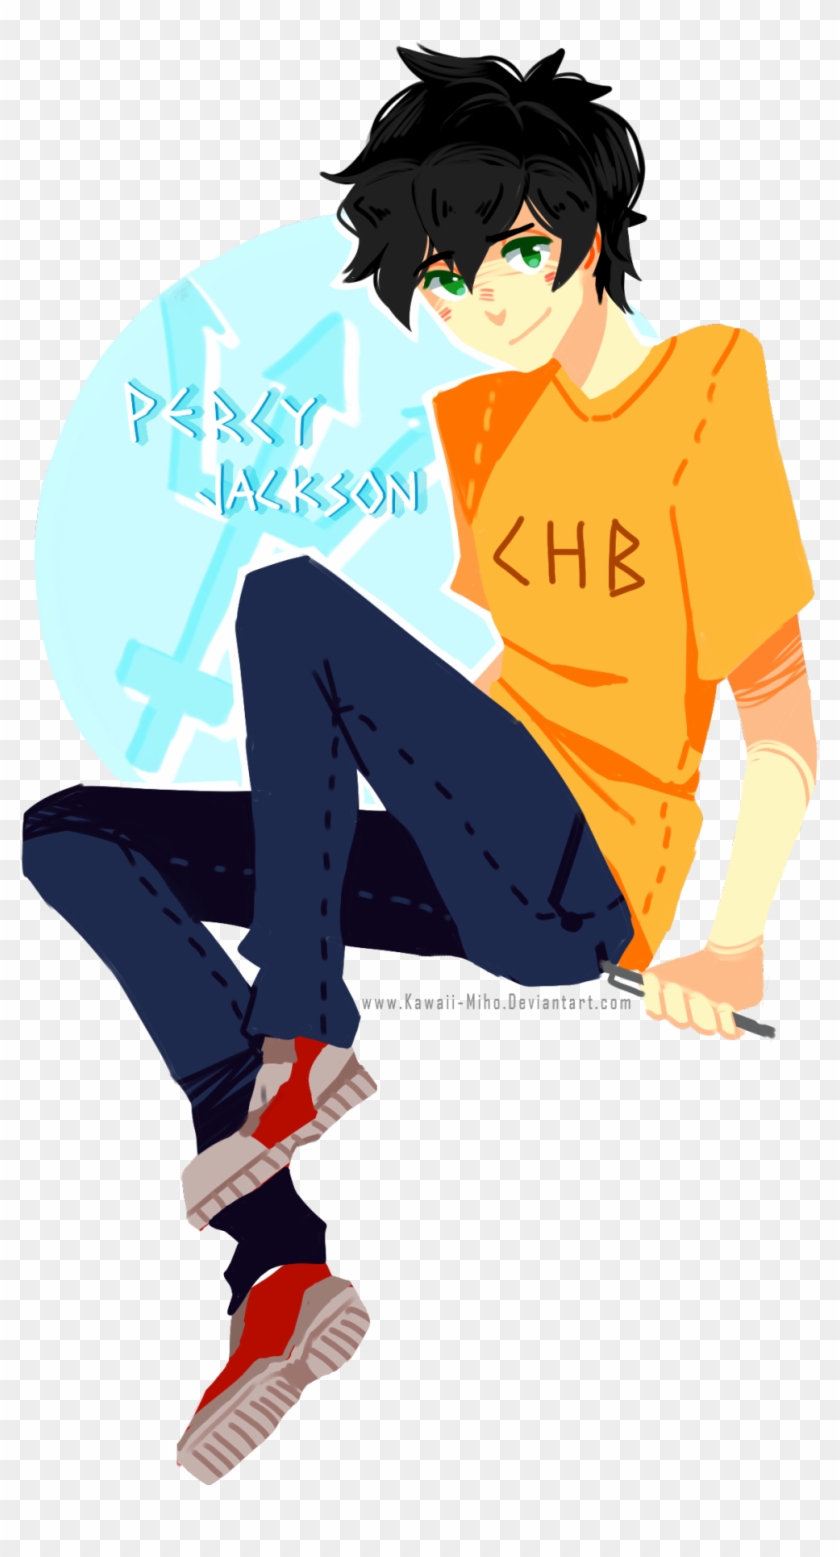 Percy Jackson - Percy Jackson Clipart Transparent #1424869